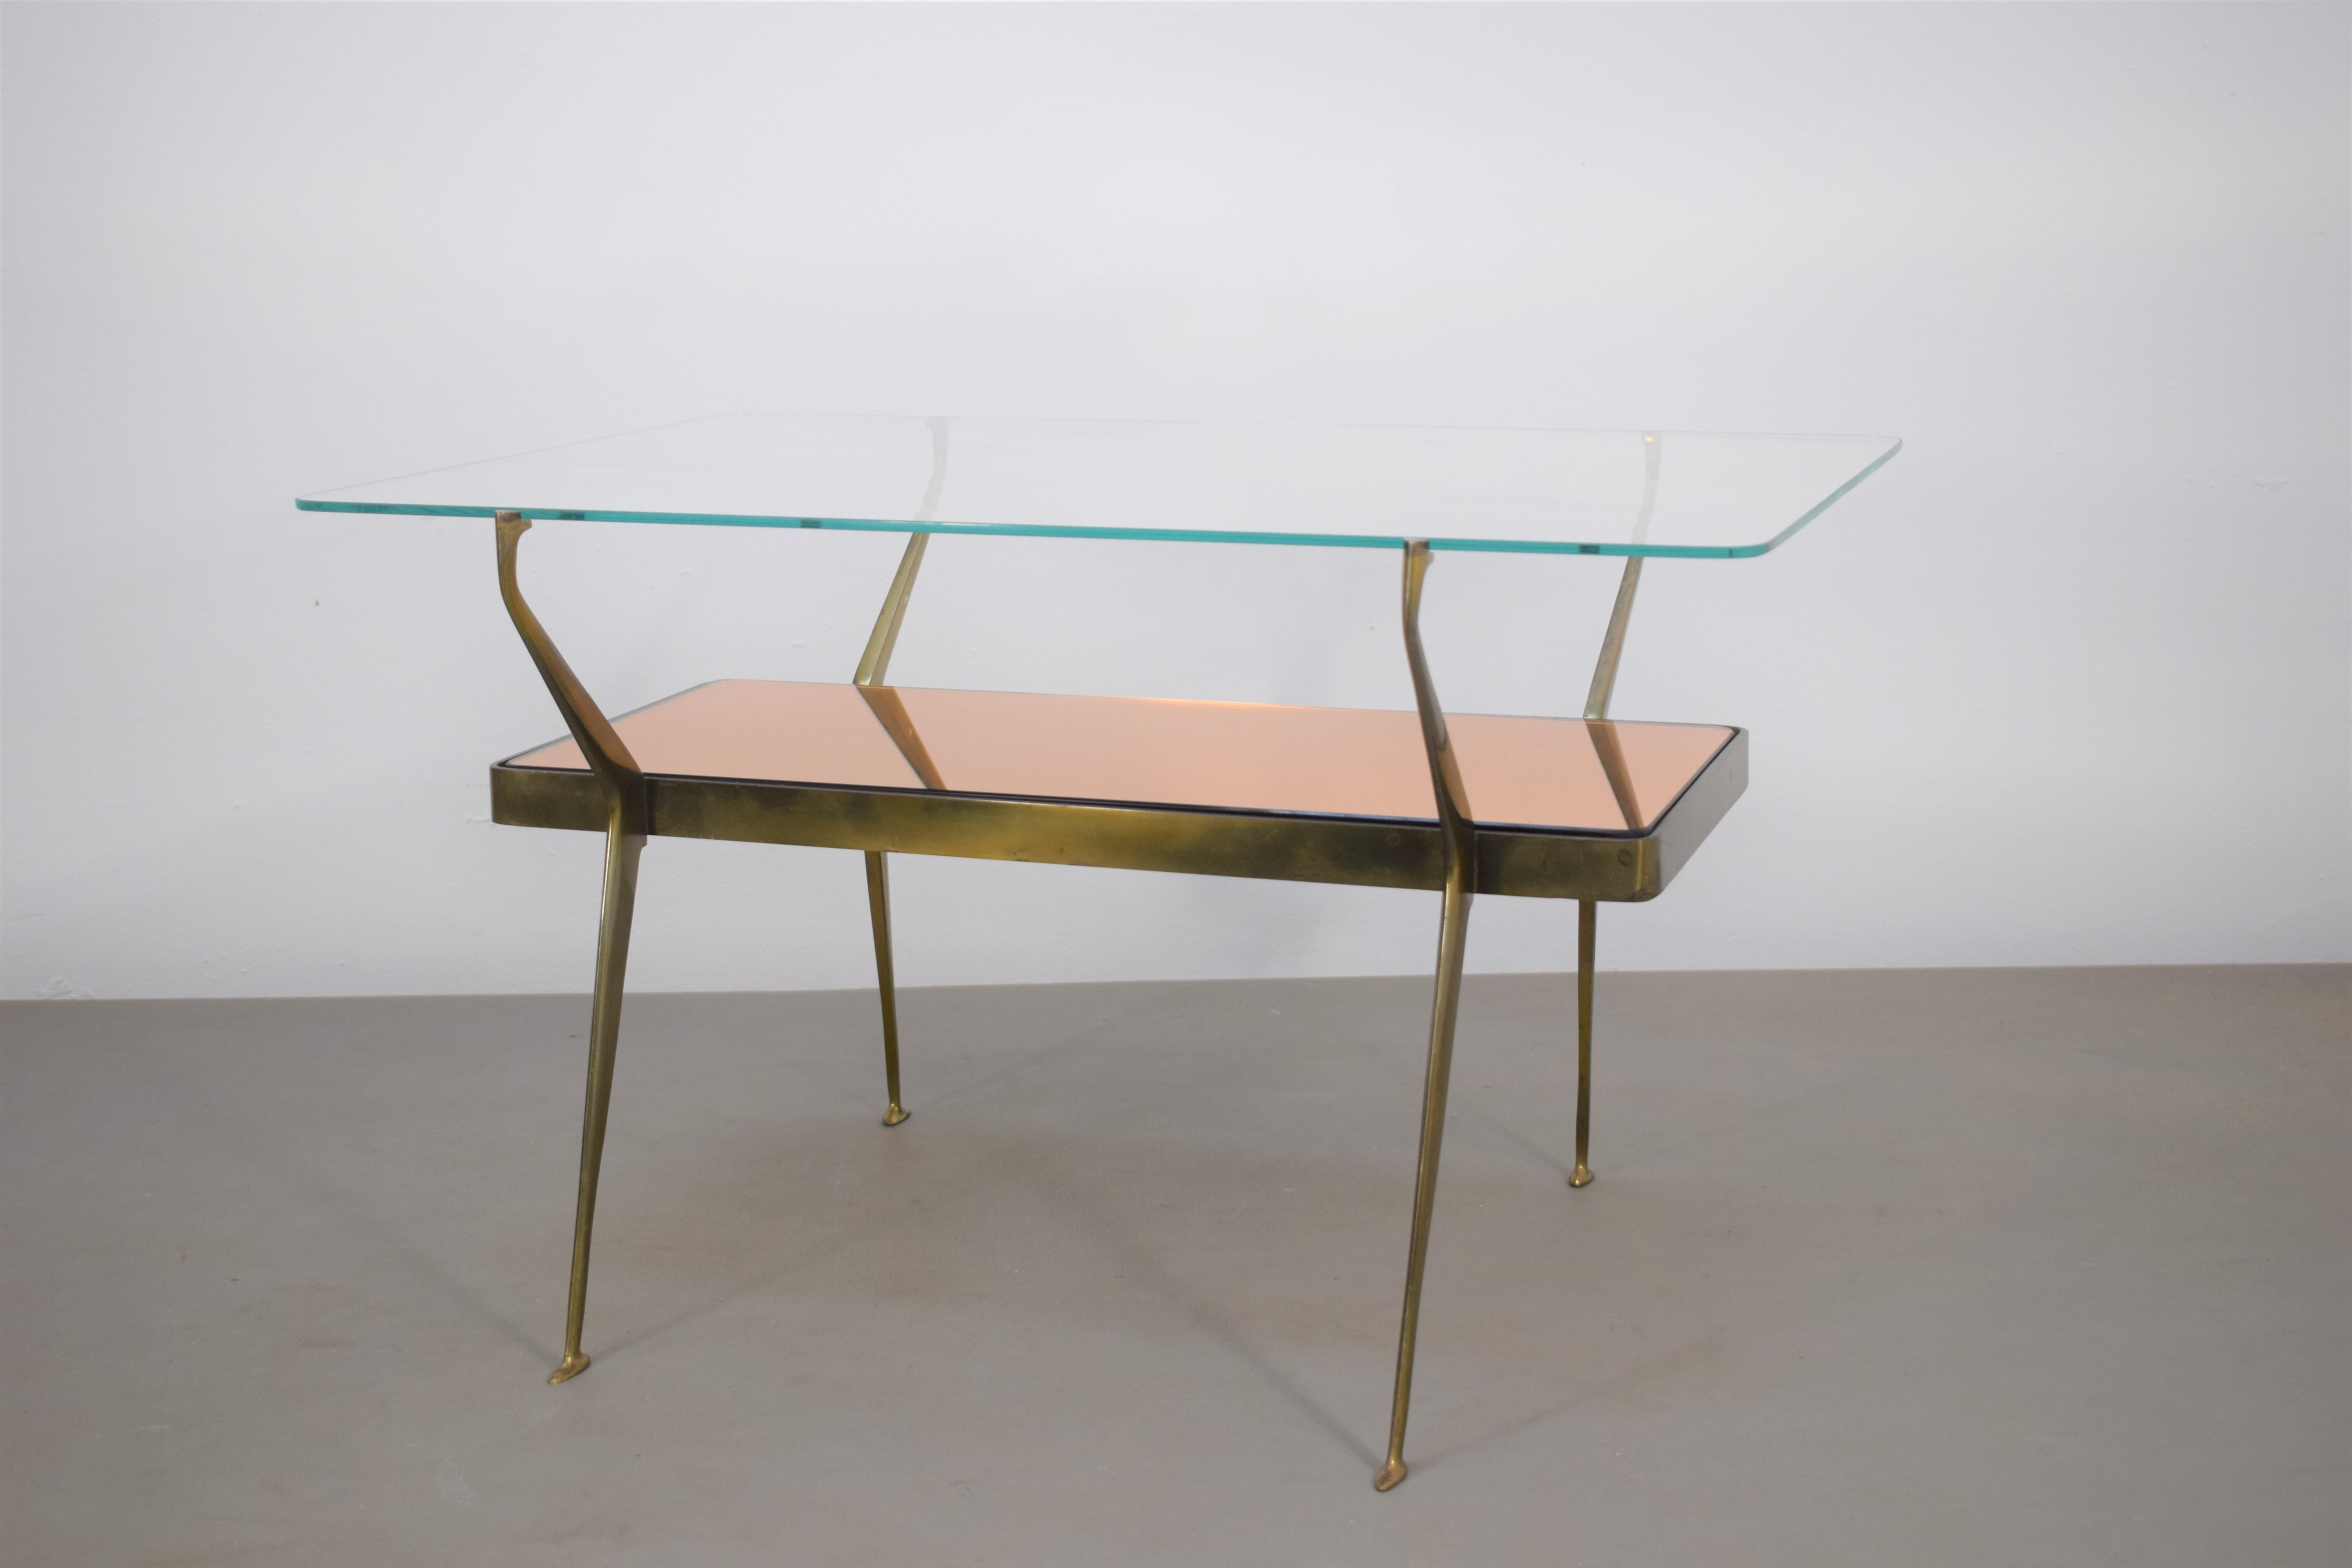 Italian coffee table by Cesare Lacca, 1950s.
Good condition.
Dimensions: H= 44 cm; W= 72 cm; D= 53,5 cm.